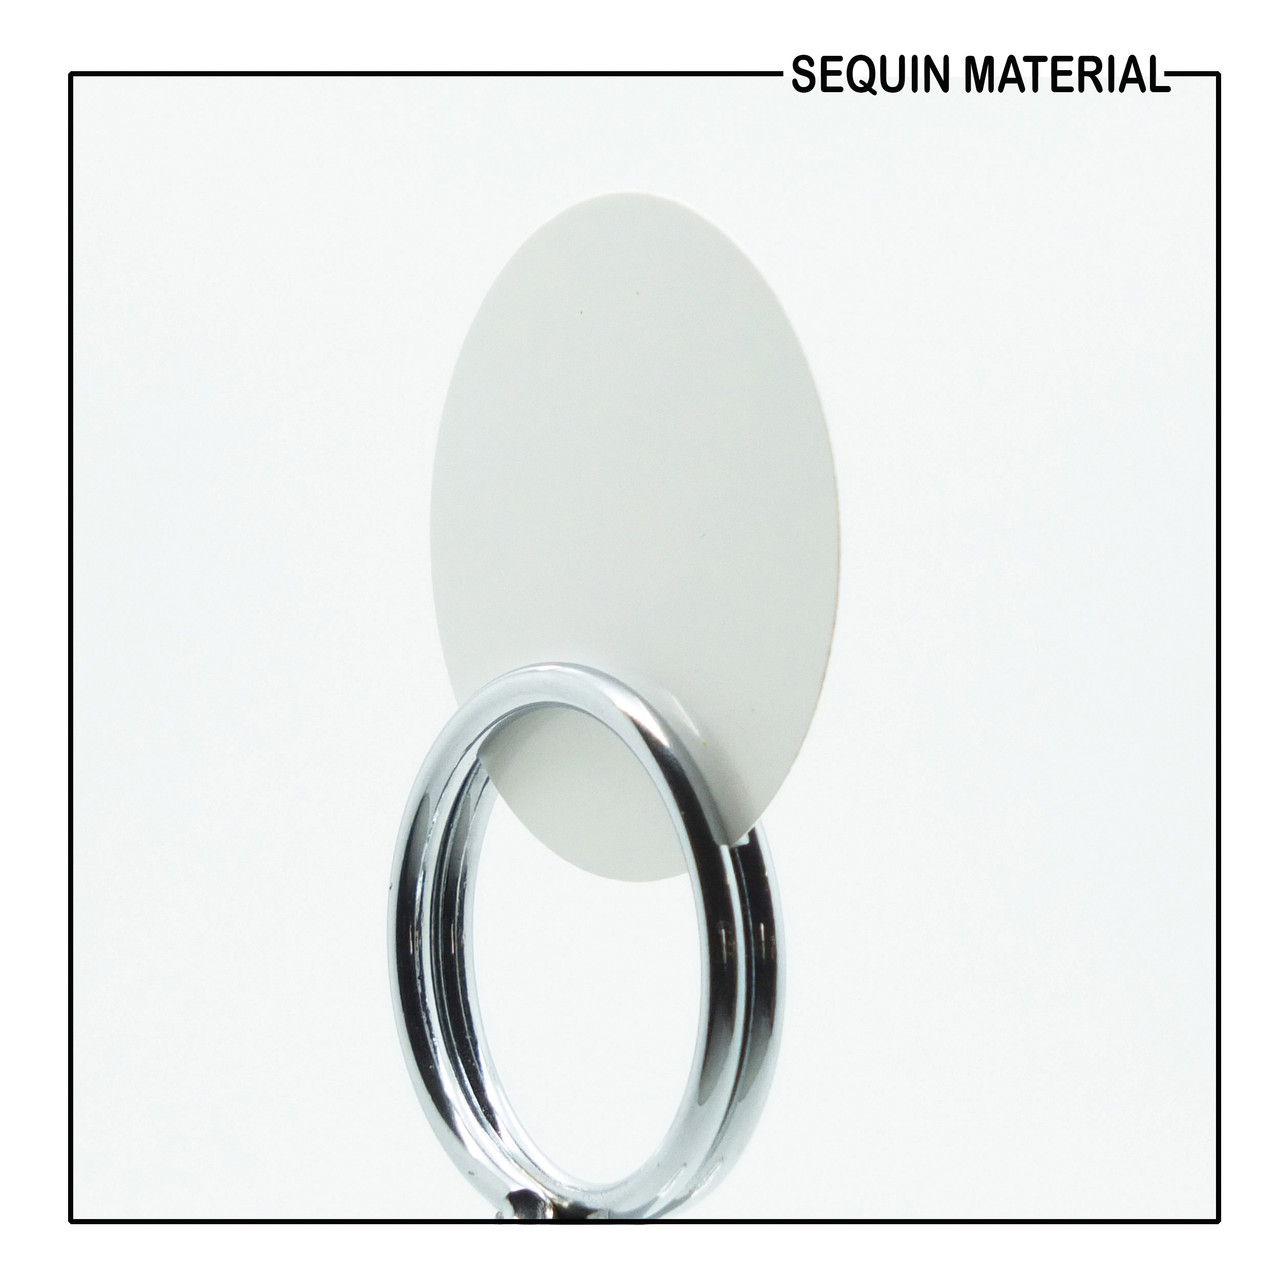 SequinsUSA Rainbow Squares on White Opaque Print Sequin Material Film RL843